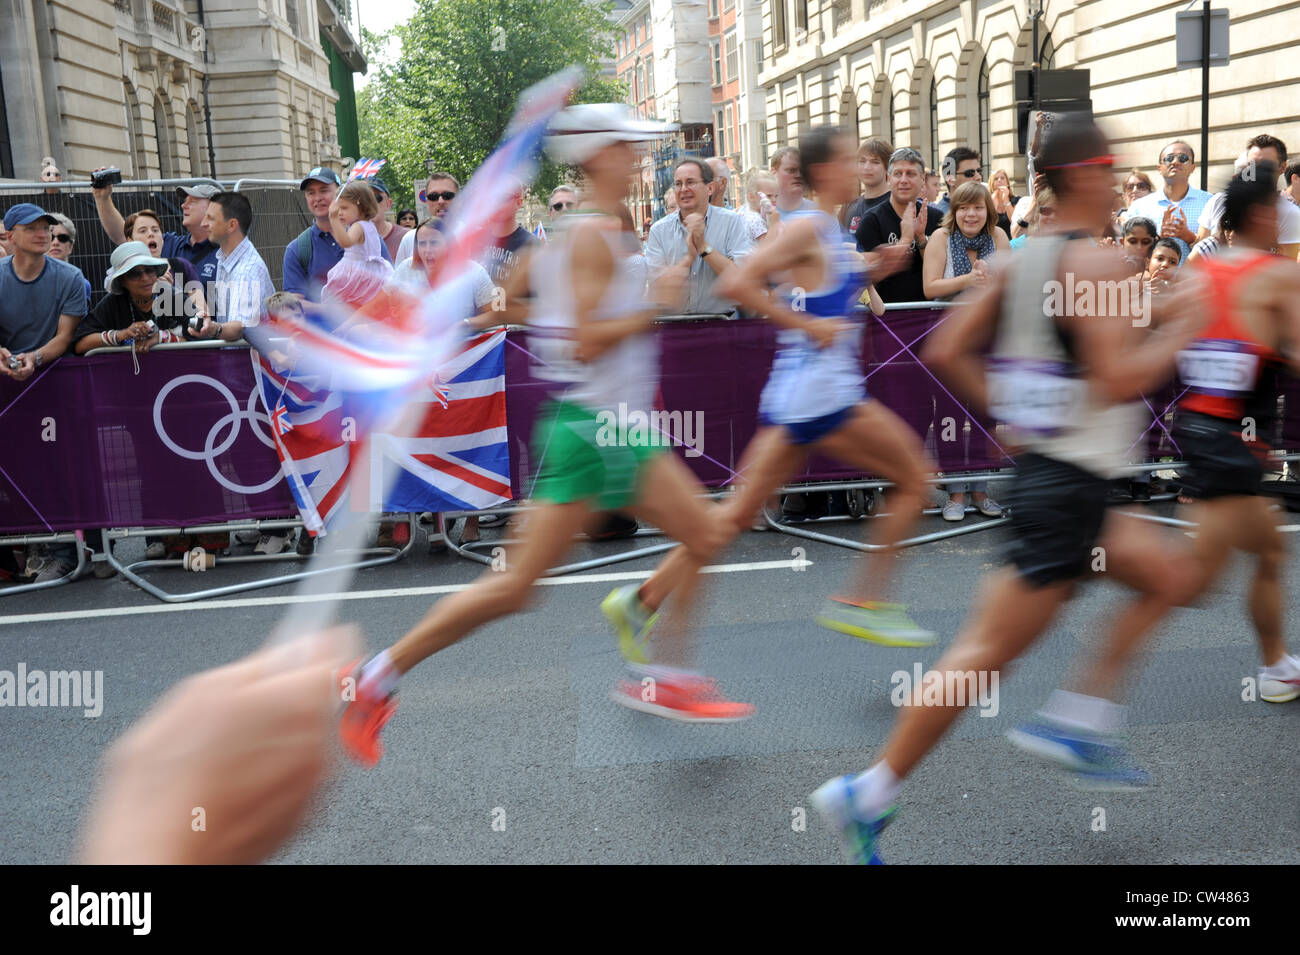 Crowds waving union jack flags during the London Olympic Marathon Mens Race 2012 UK Stock Photo